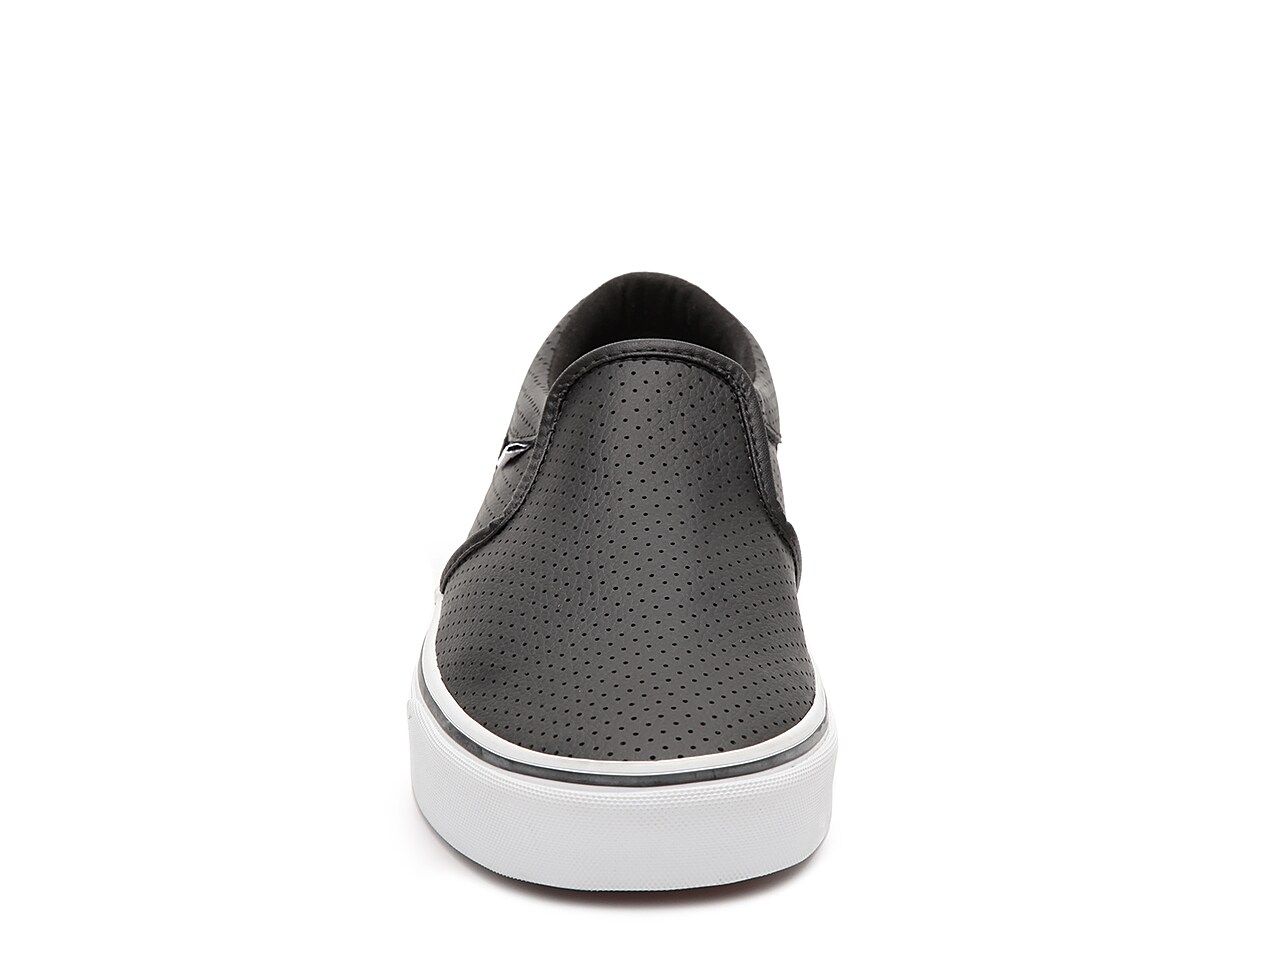 Vans Asher Perforated Leather Slip-On Sneaker - Men's | DSW